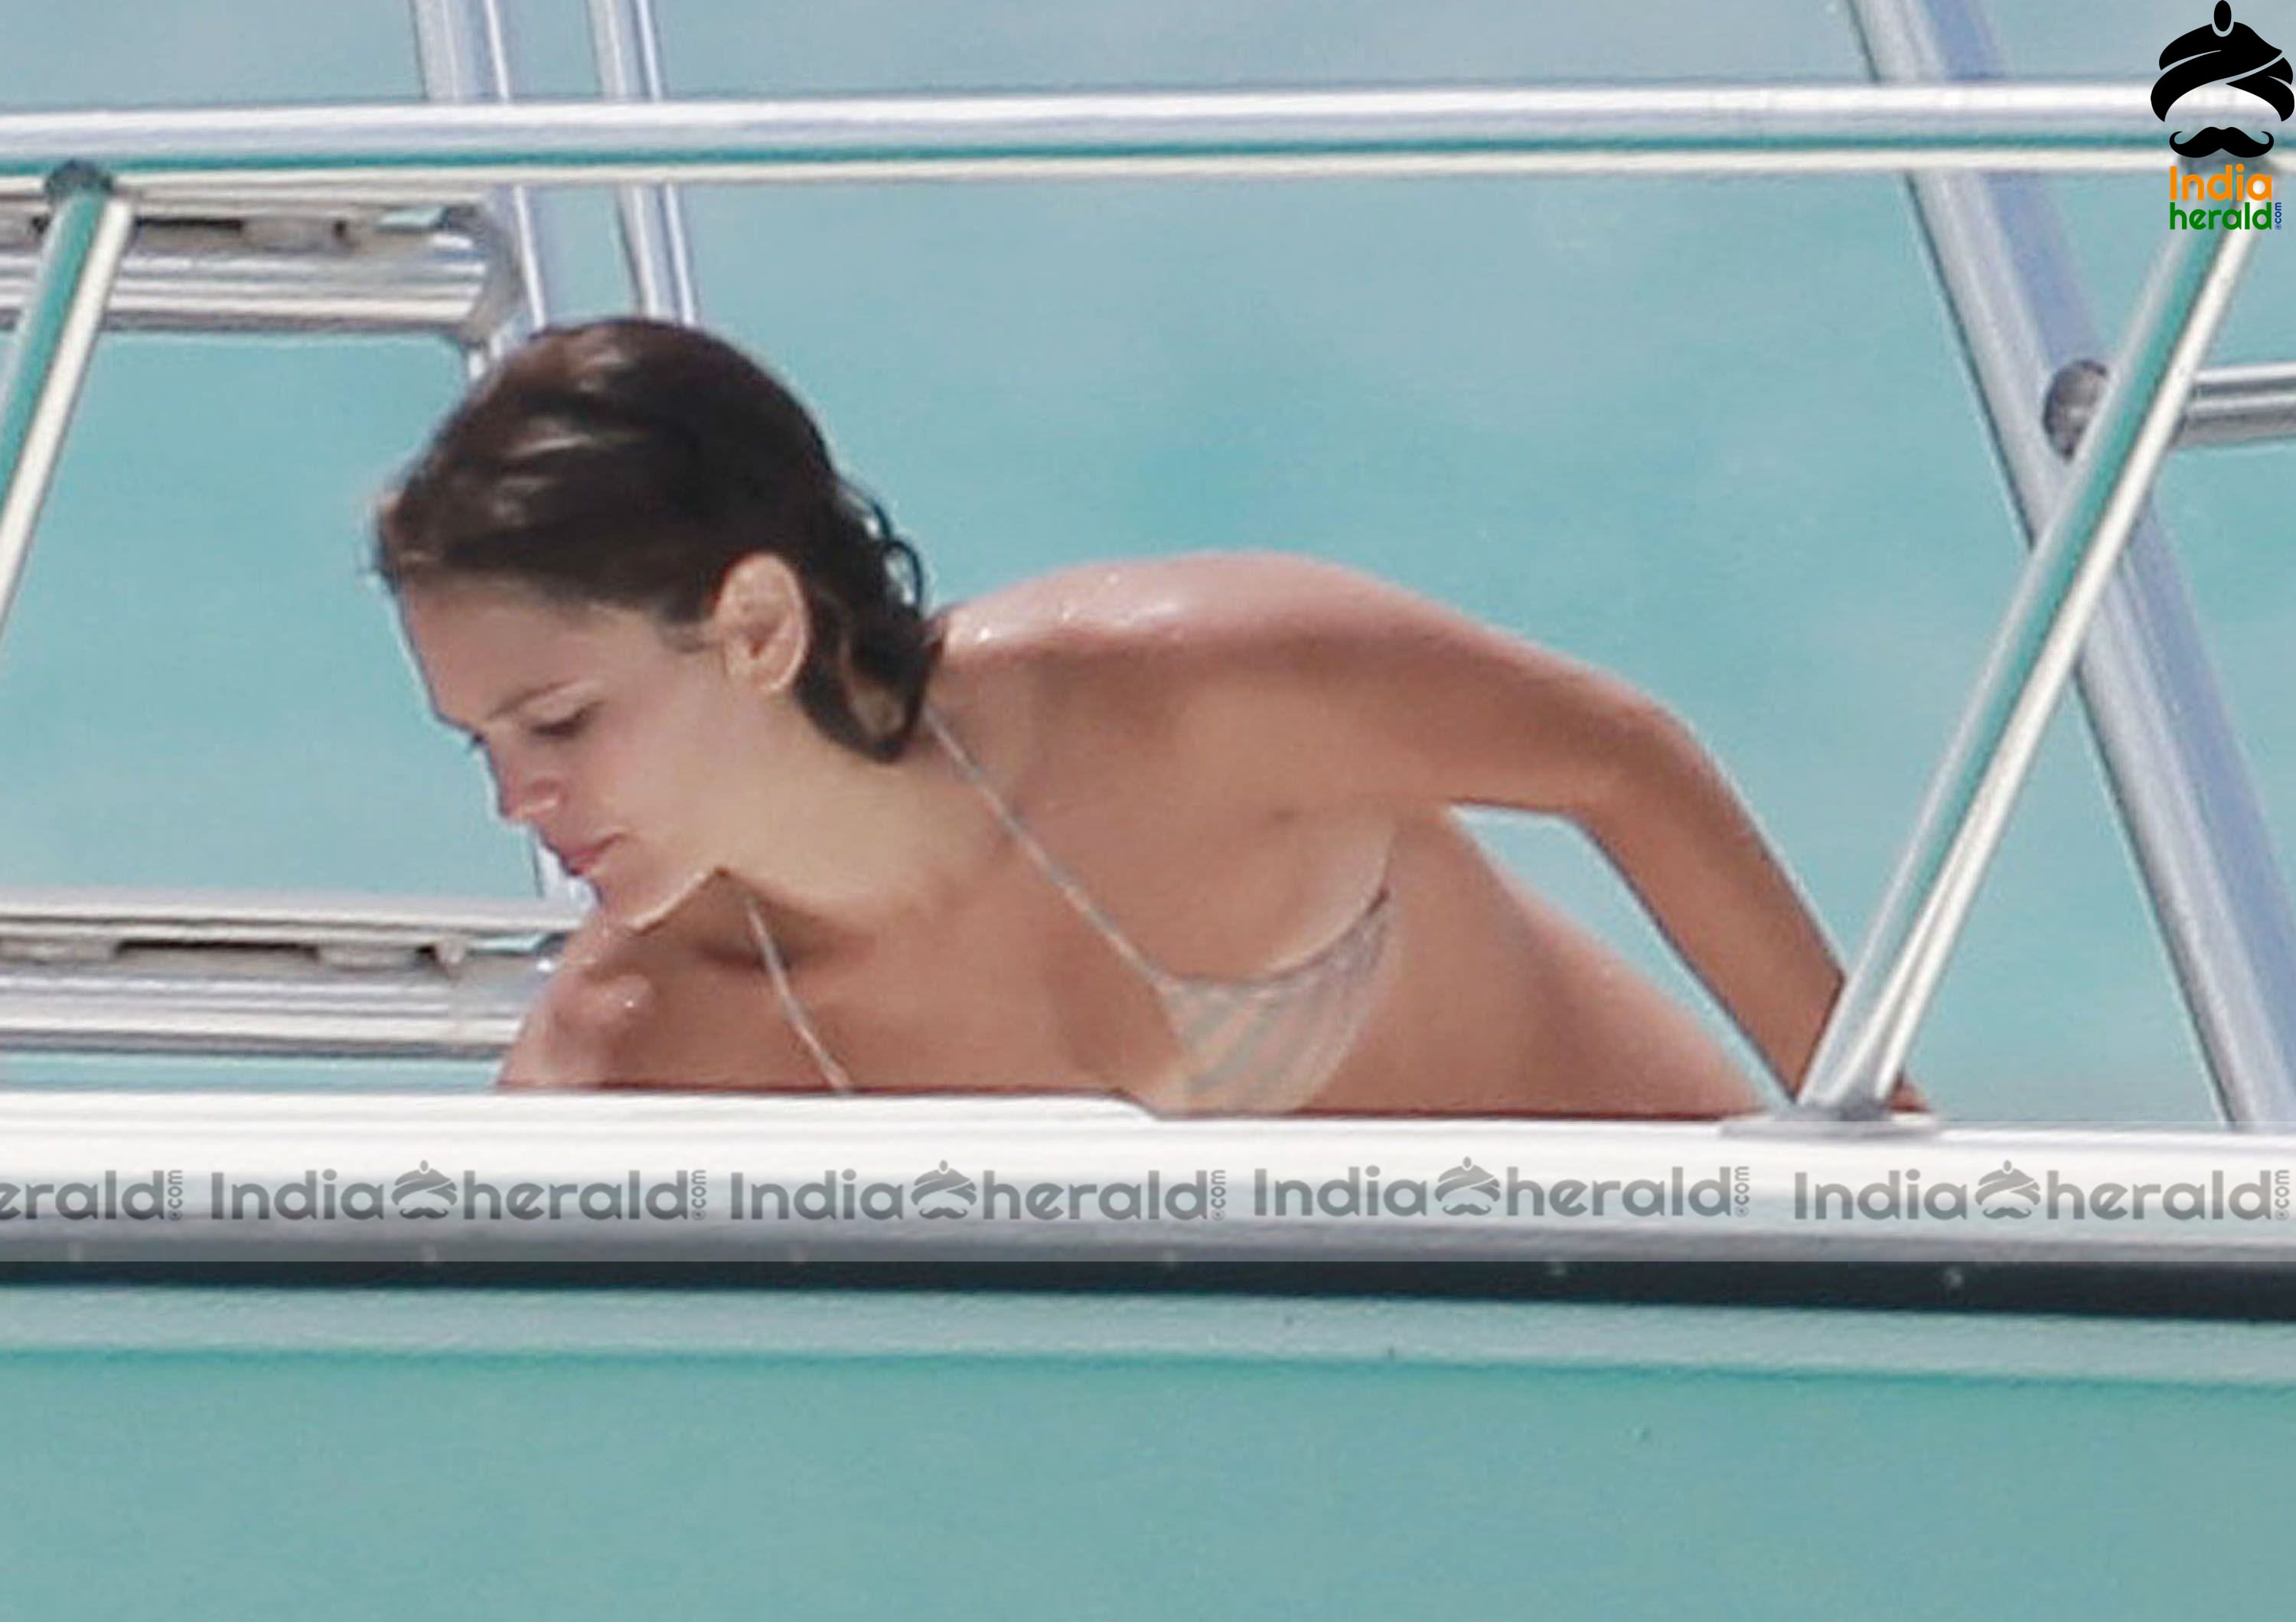 Rachel Bilson Wearing a bikini and Enjoying in Yacht at Barbados Set 5